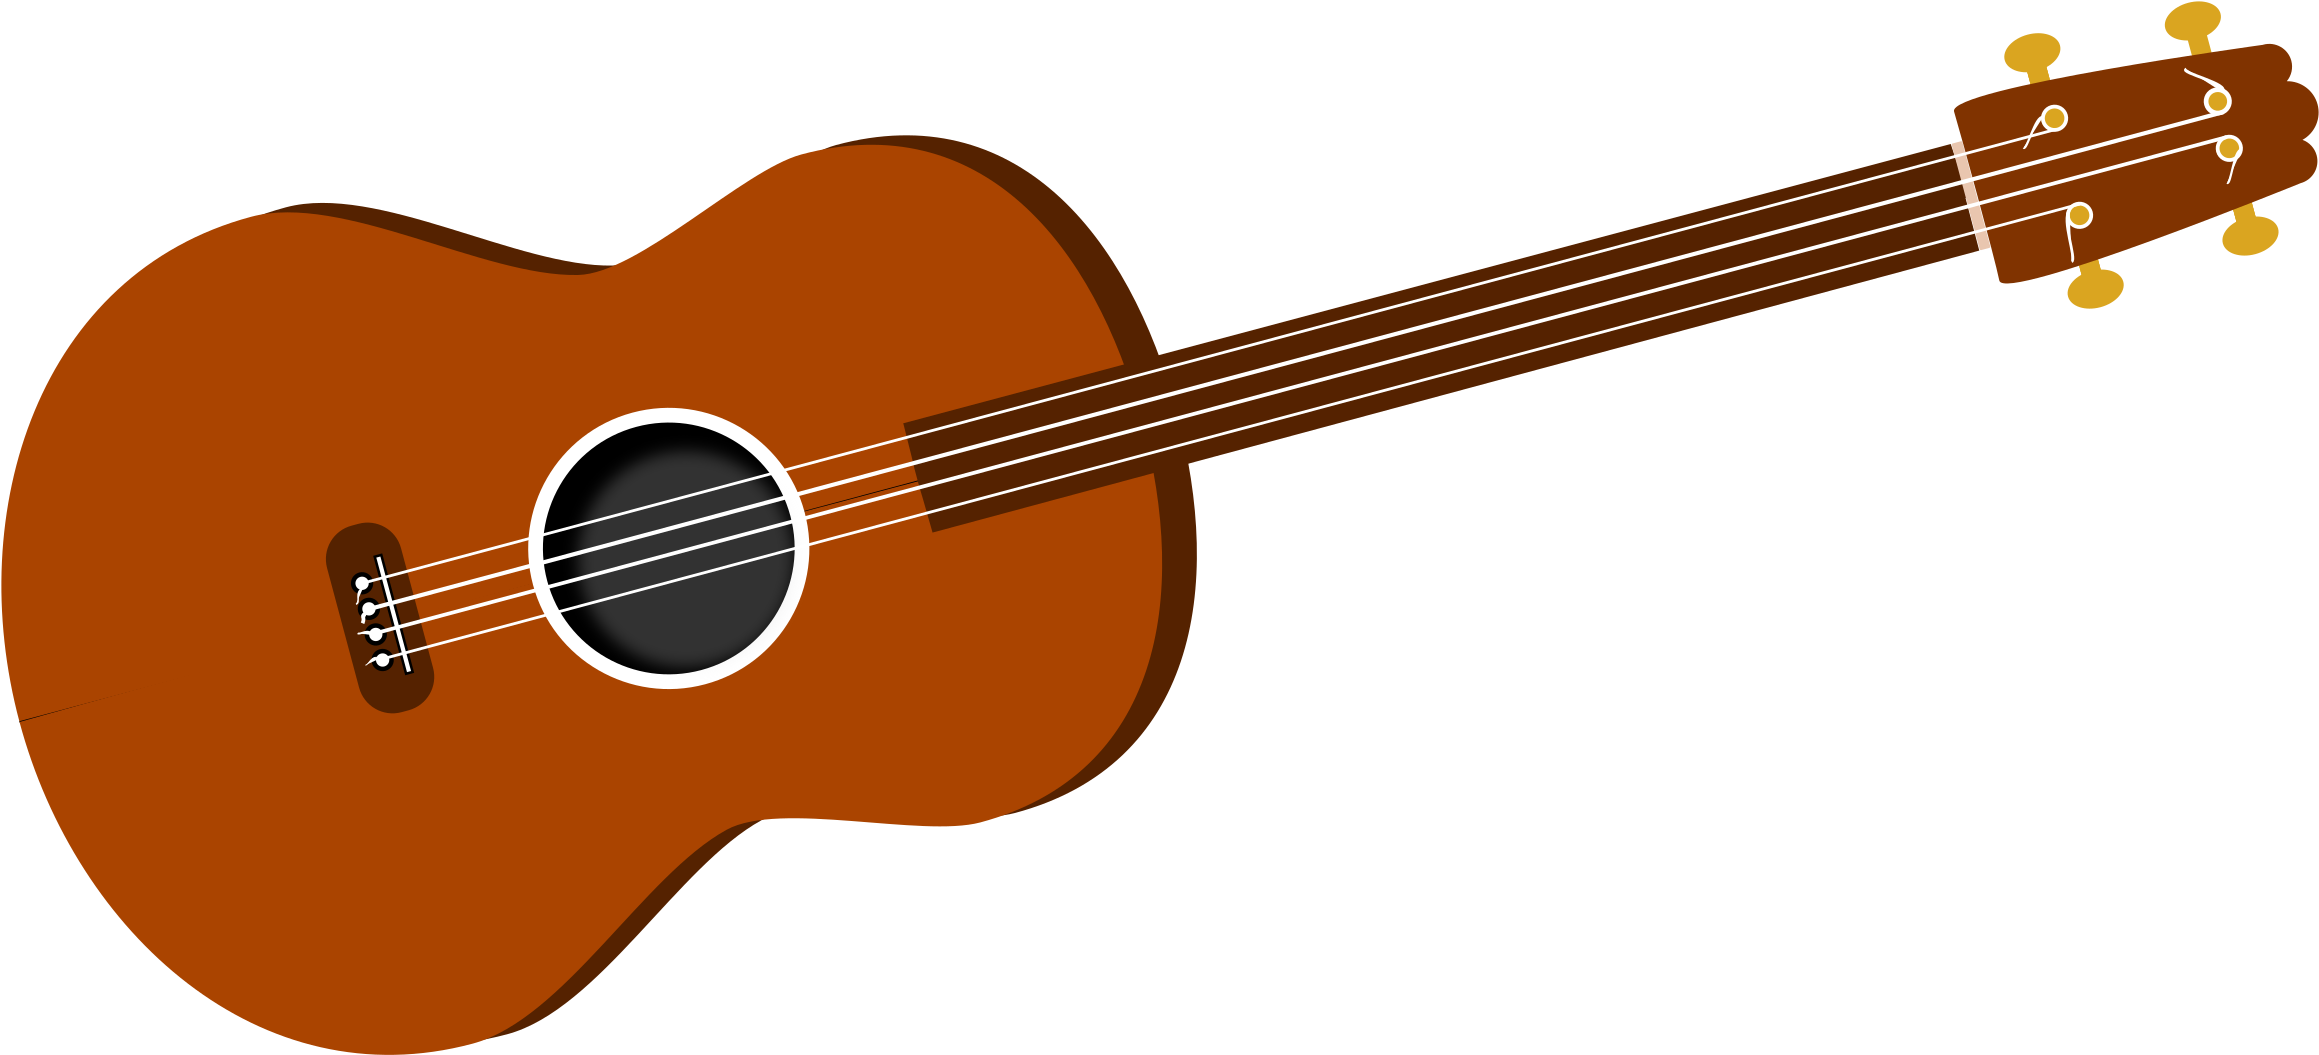 Ukulele Guitar PNG HD Quality